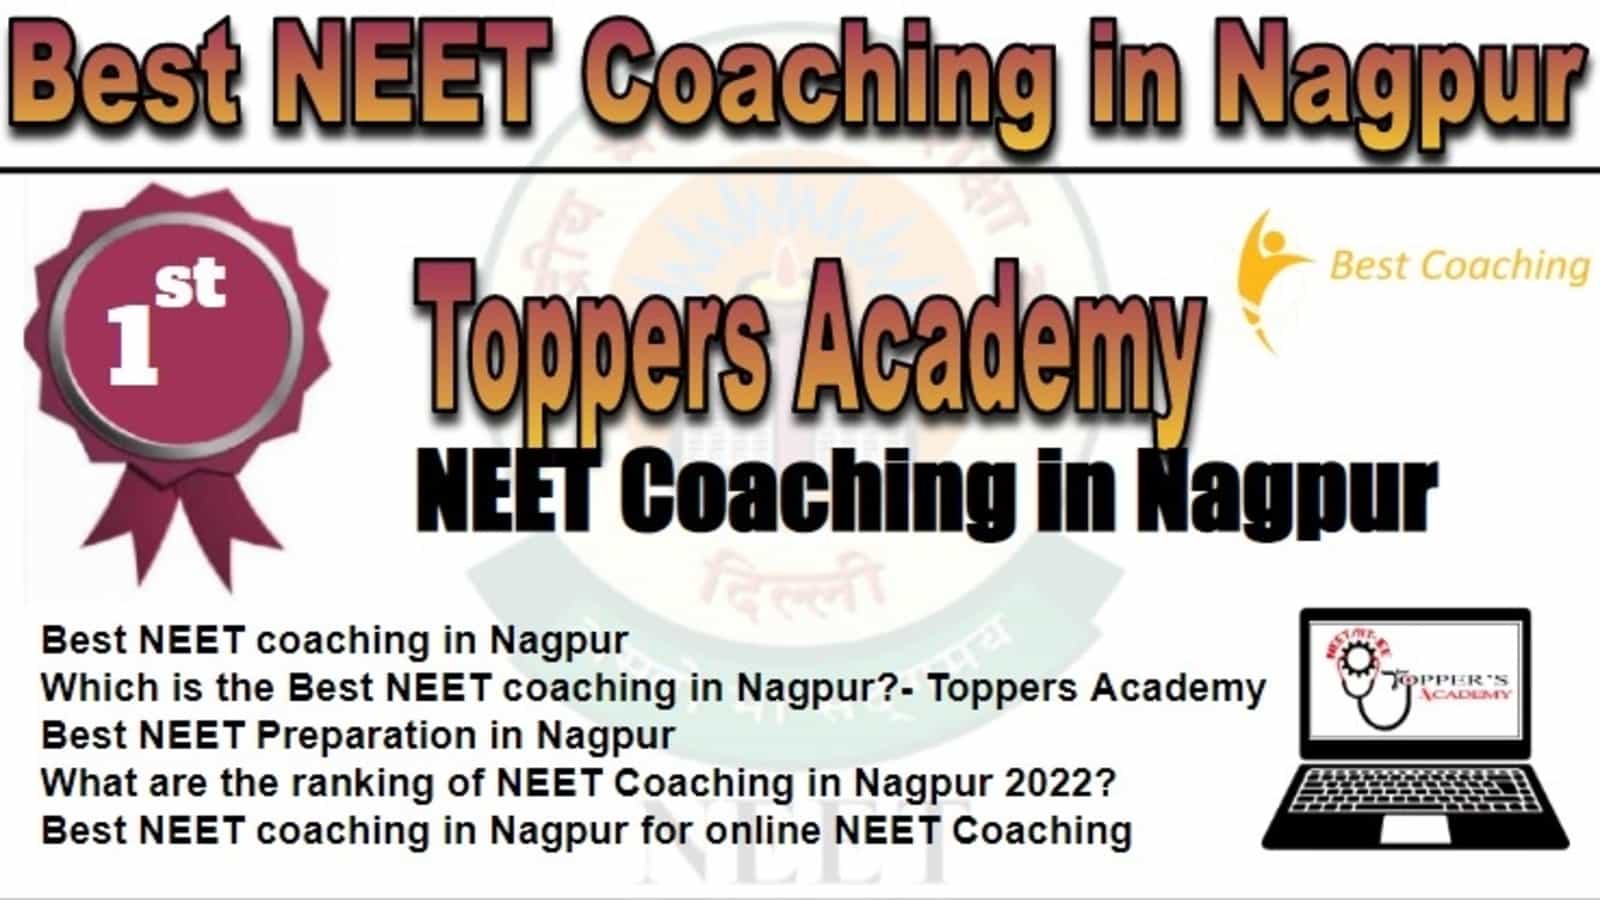 Rank 1 Best NEET Coaching in Nagpur